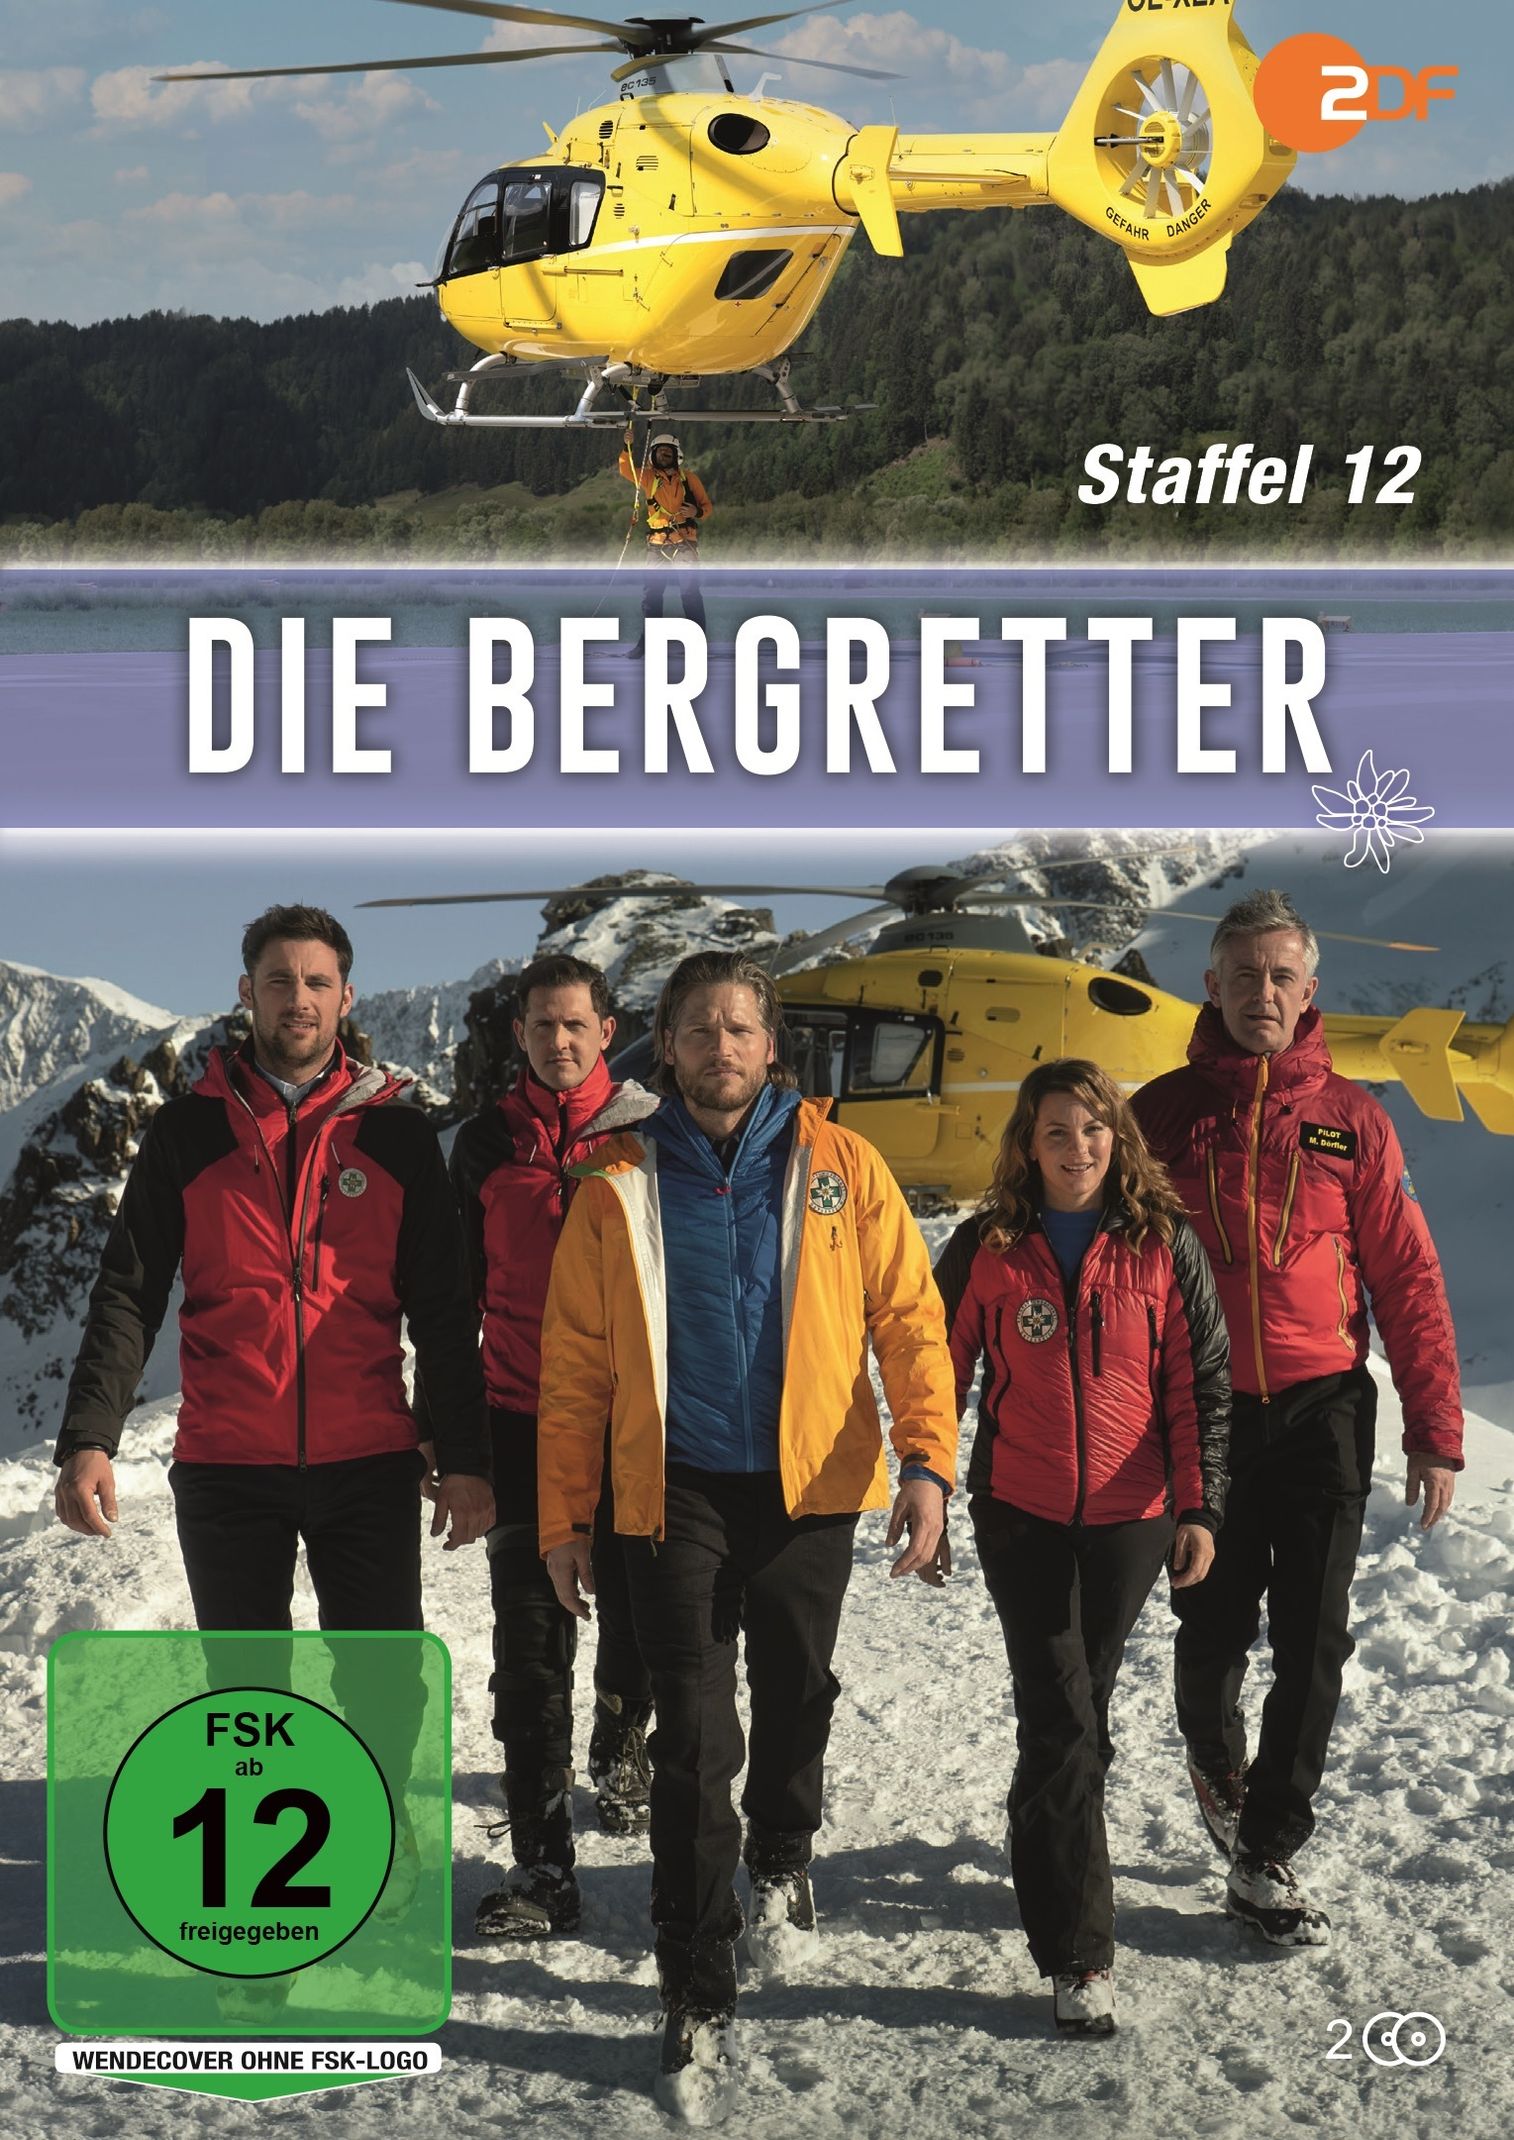 Die Bergretter - Staffel 12 DVD bei Weltbild.de bestellen